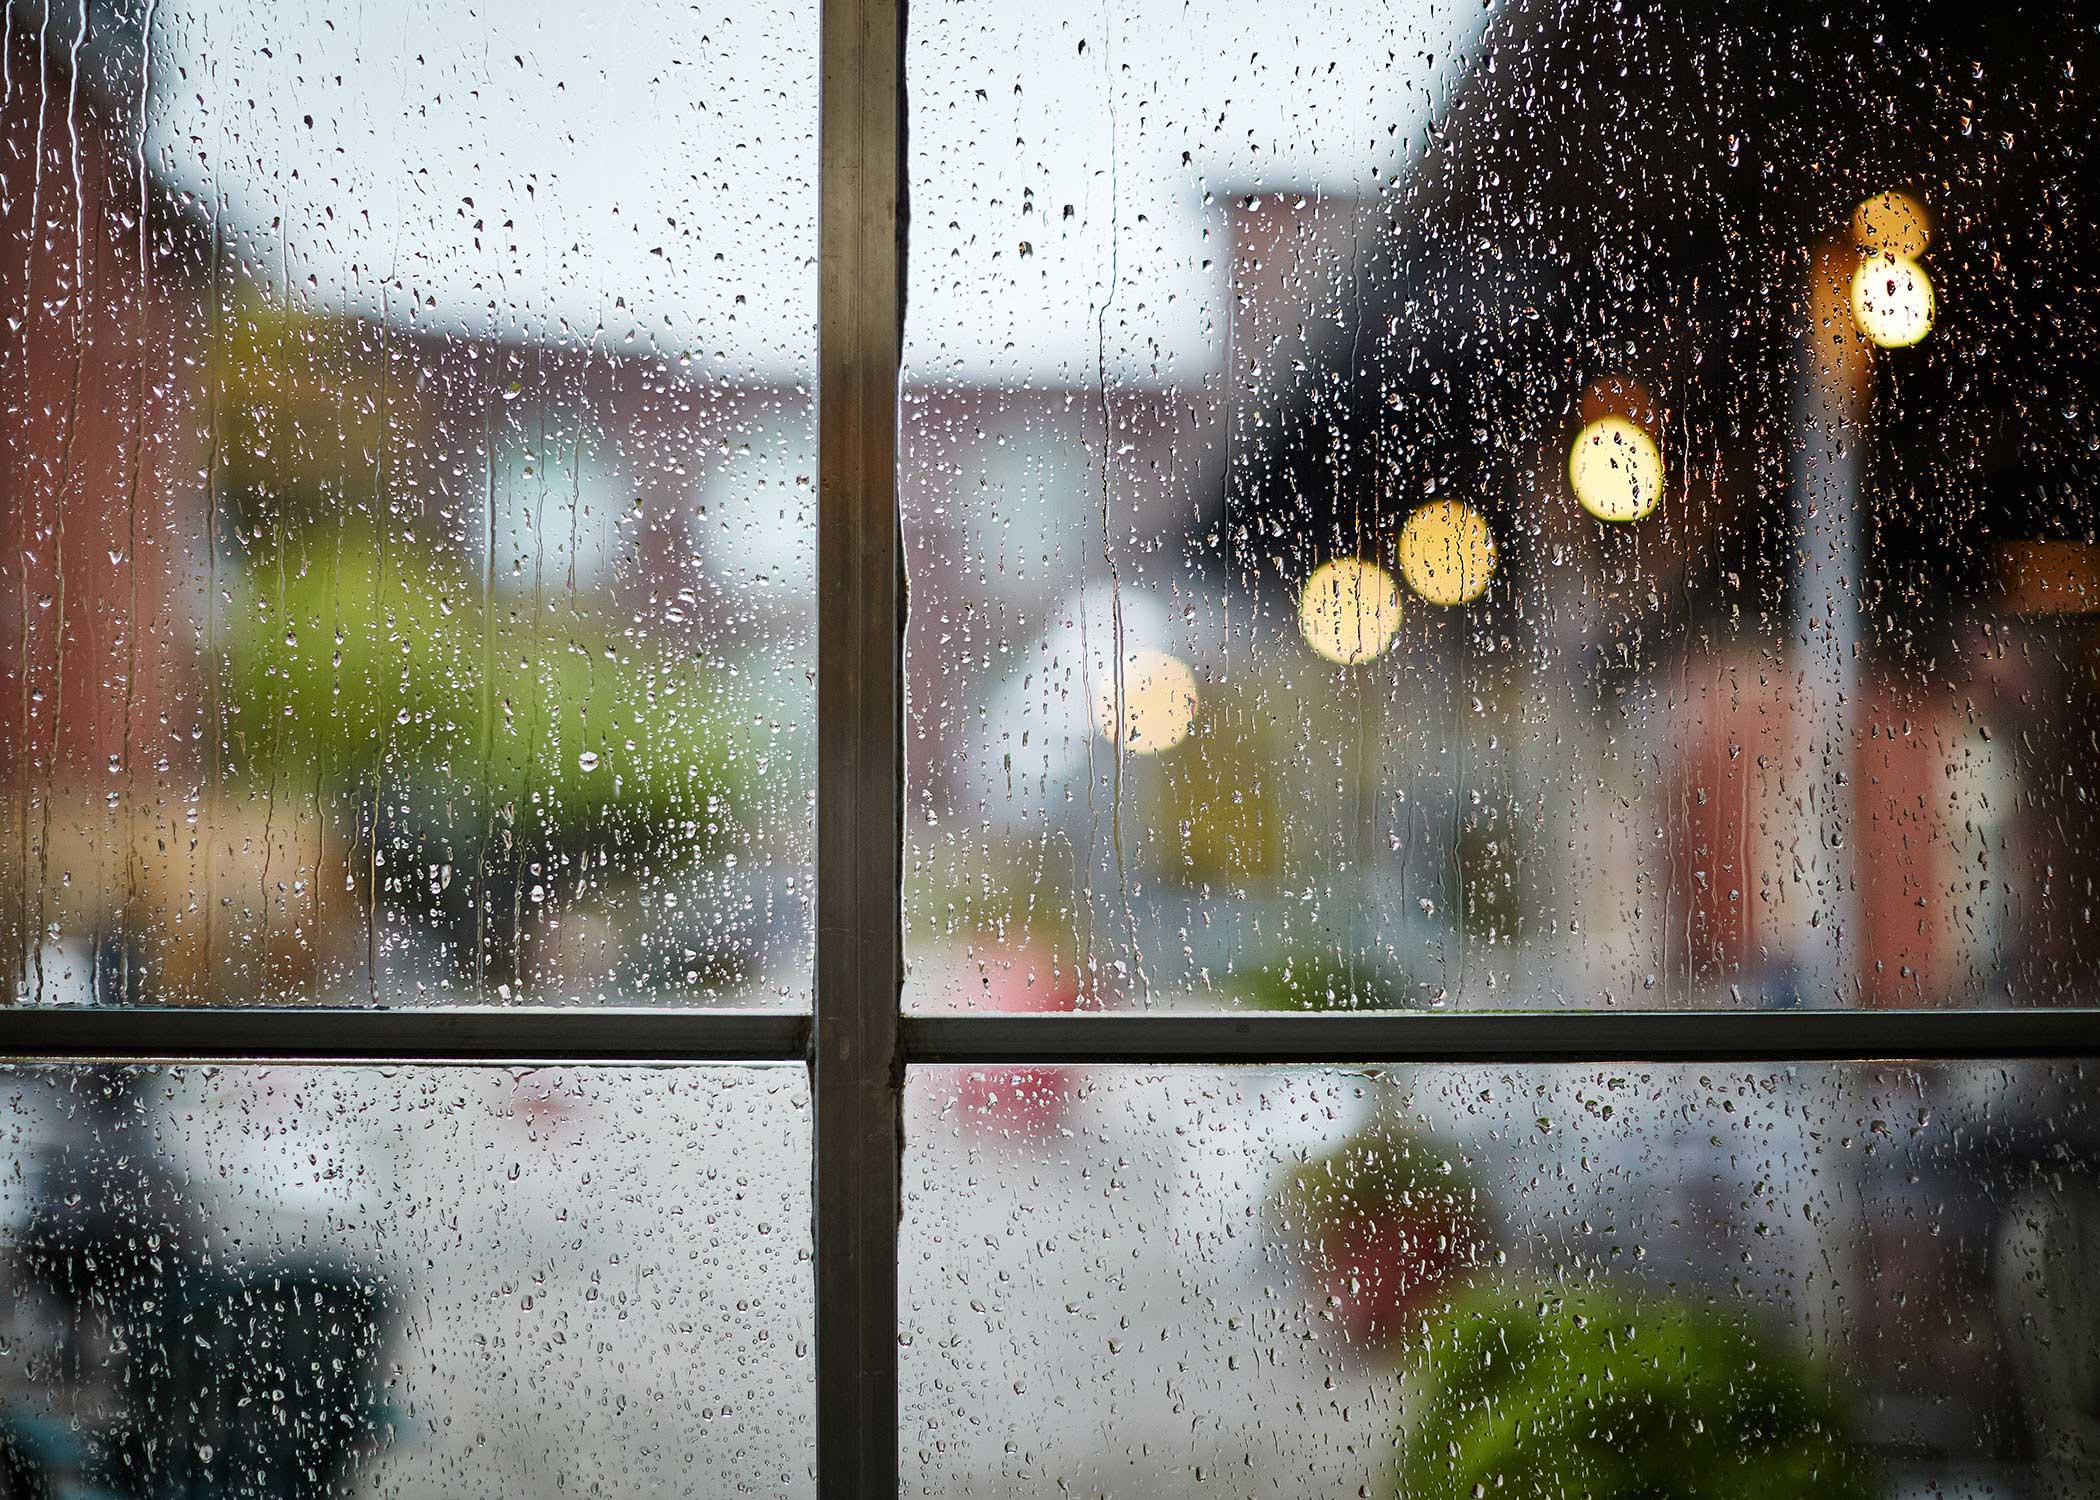 A rainy window at Northwest Coffee Roasting in St. Louis, Missouri.